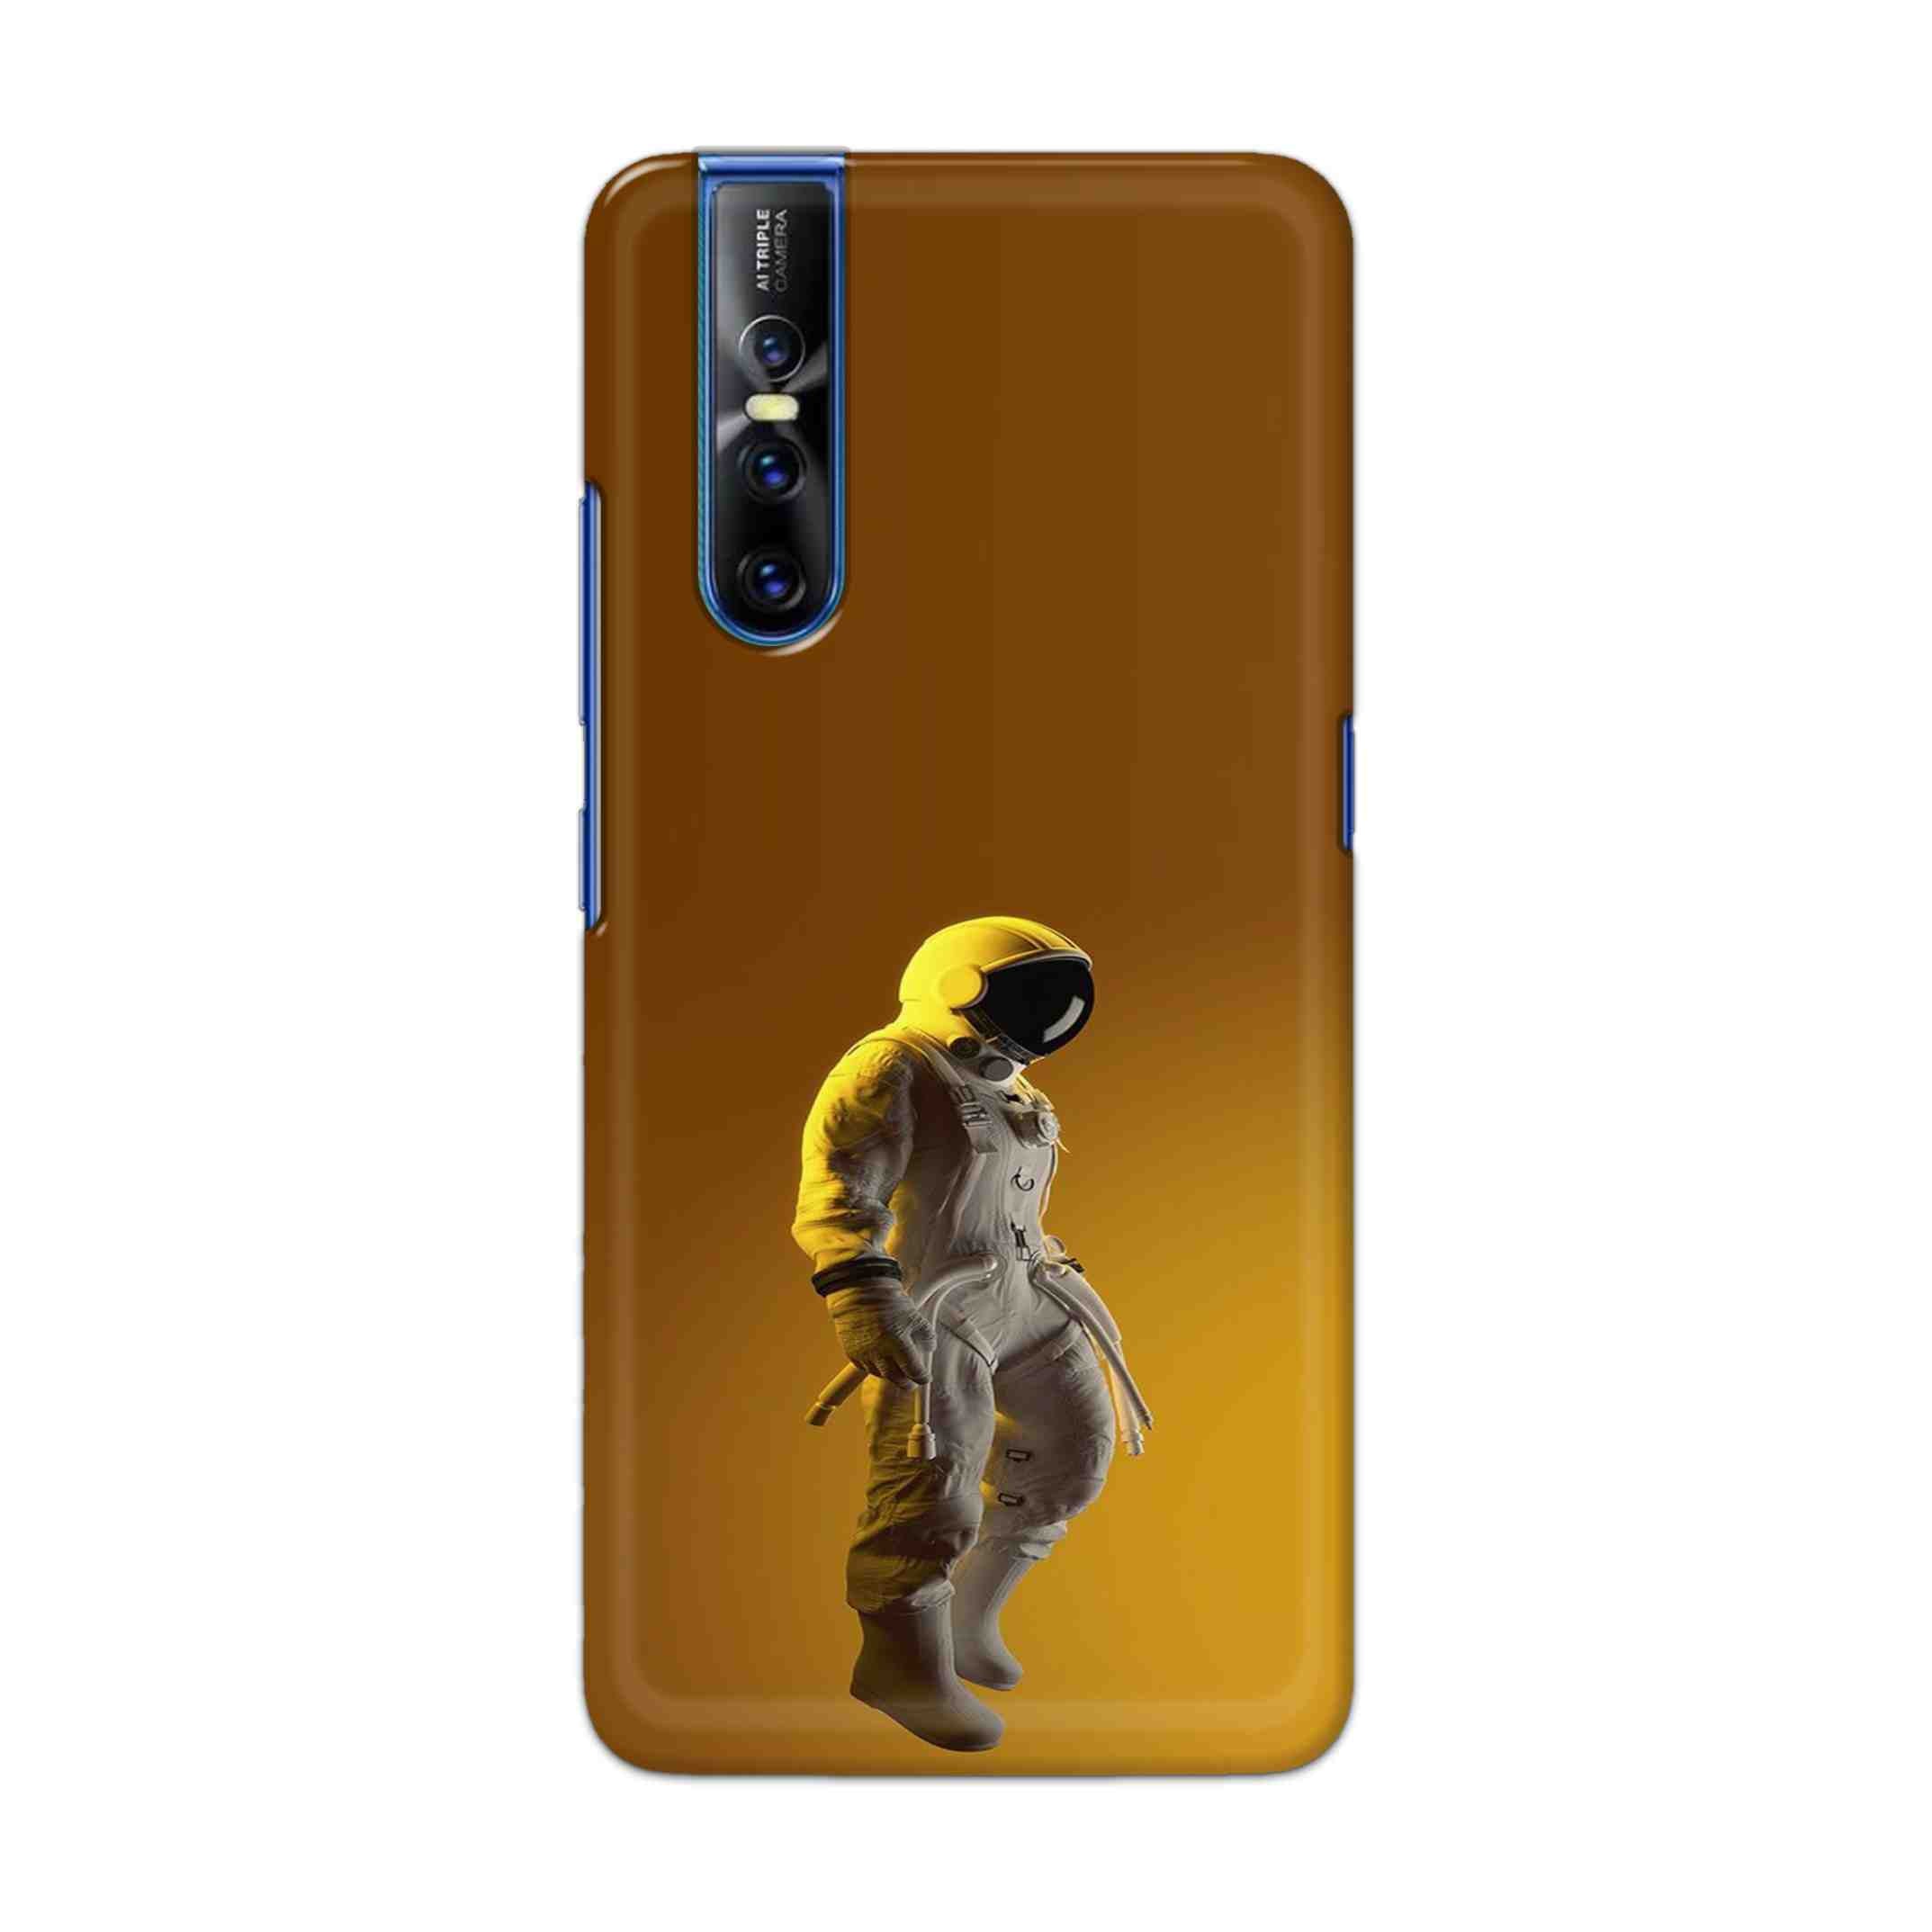 Buy Yellow Astronaut Hard Back Mobile Phone Case Cover For Vivo V15 Pro Online